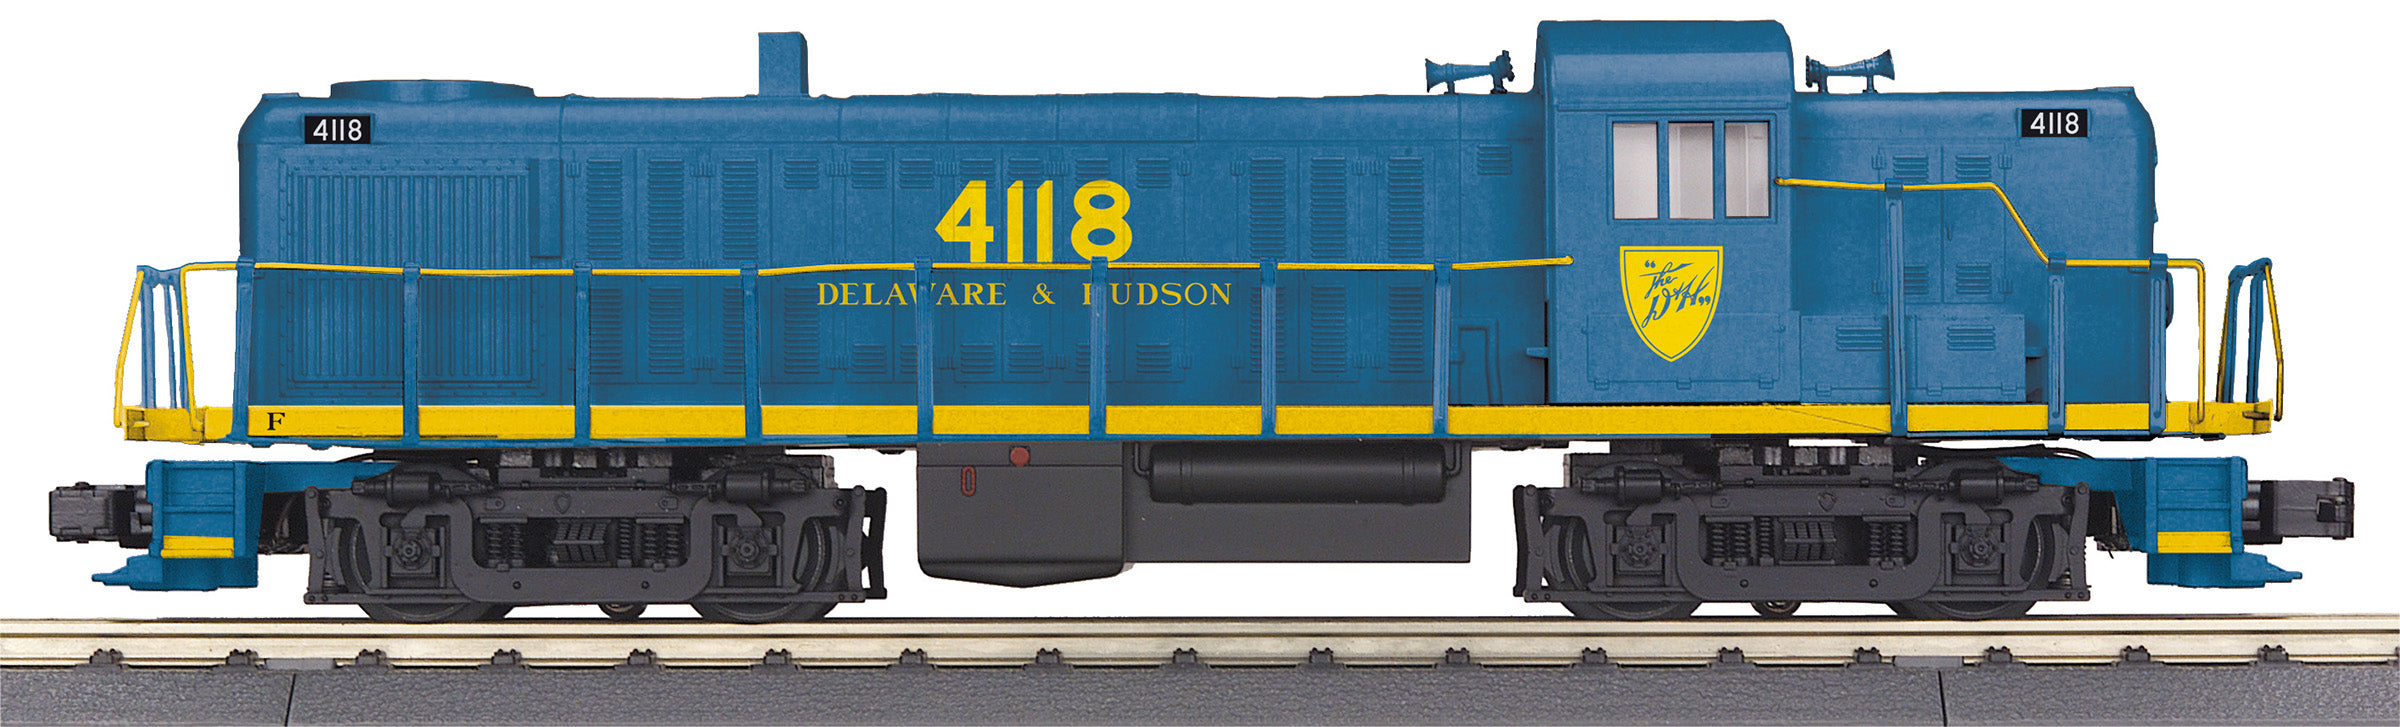 MTH 30-21211-1 - RS-3 Diesel Engine "Delaware & Hudson" #4118 w/ PS3 - Custom Run for MrMuffin'sTrains